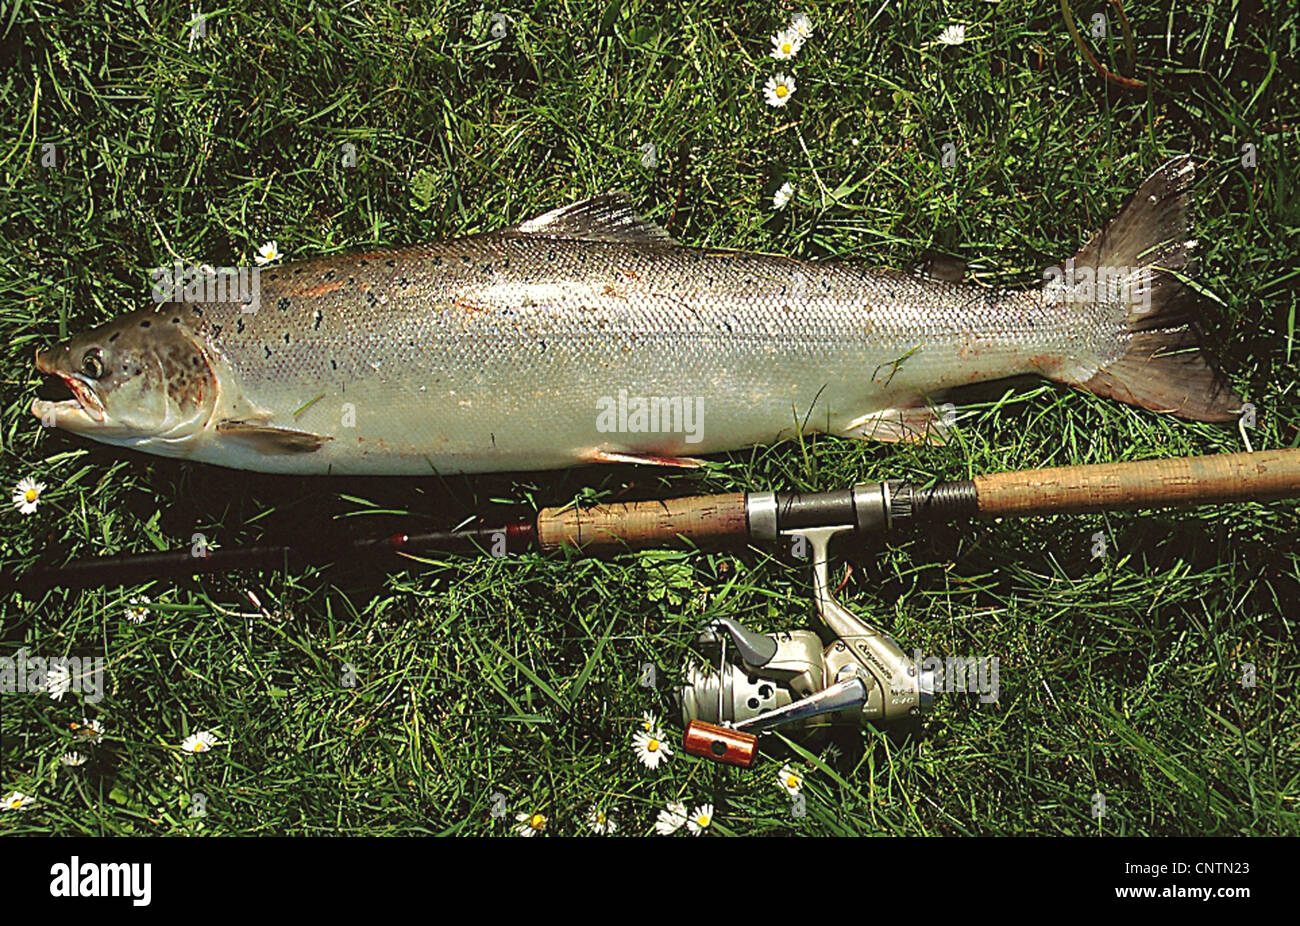 Atlantic salmon, ouananiche, lake Atlantic salmon, landlocked salmon, Sebago salmon (Salmo salar), angled fish lying with a fishing rod in grass, Ireland Stock Photo